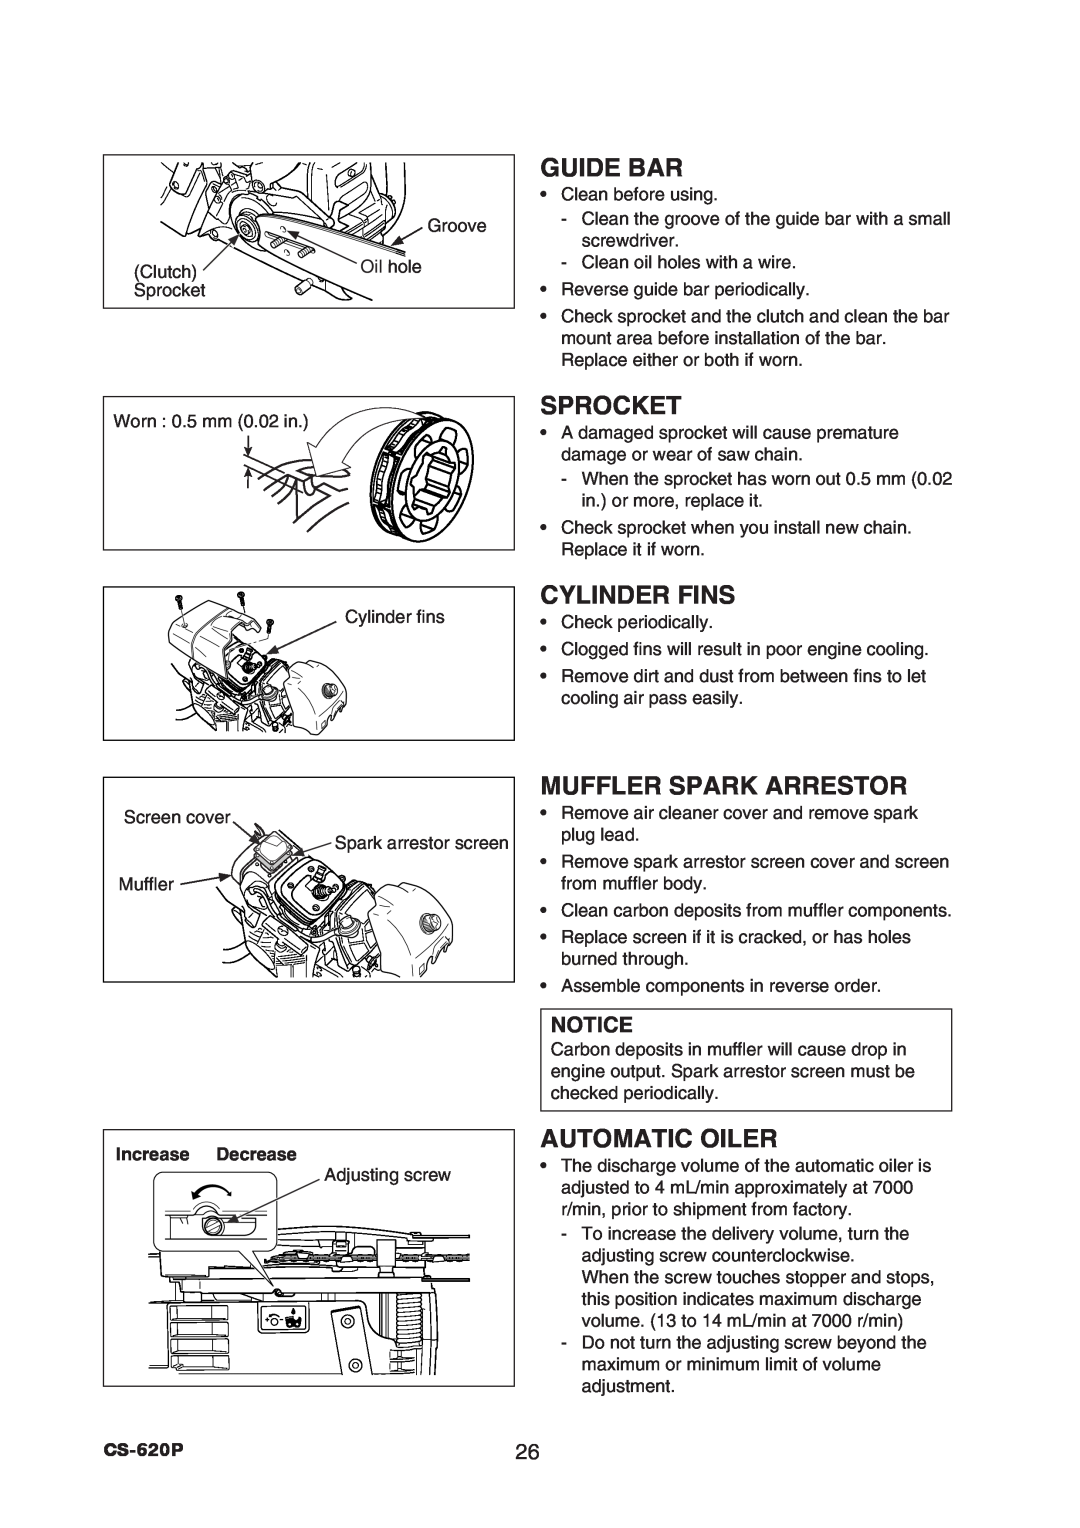 Echo CS-620P instruction manual Sprocket, Cylinder Fins, Muffler Spark Arrestor, Automatic Oiler, Guide Bar 